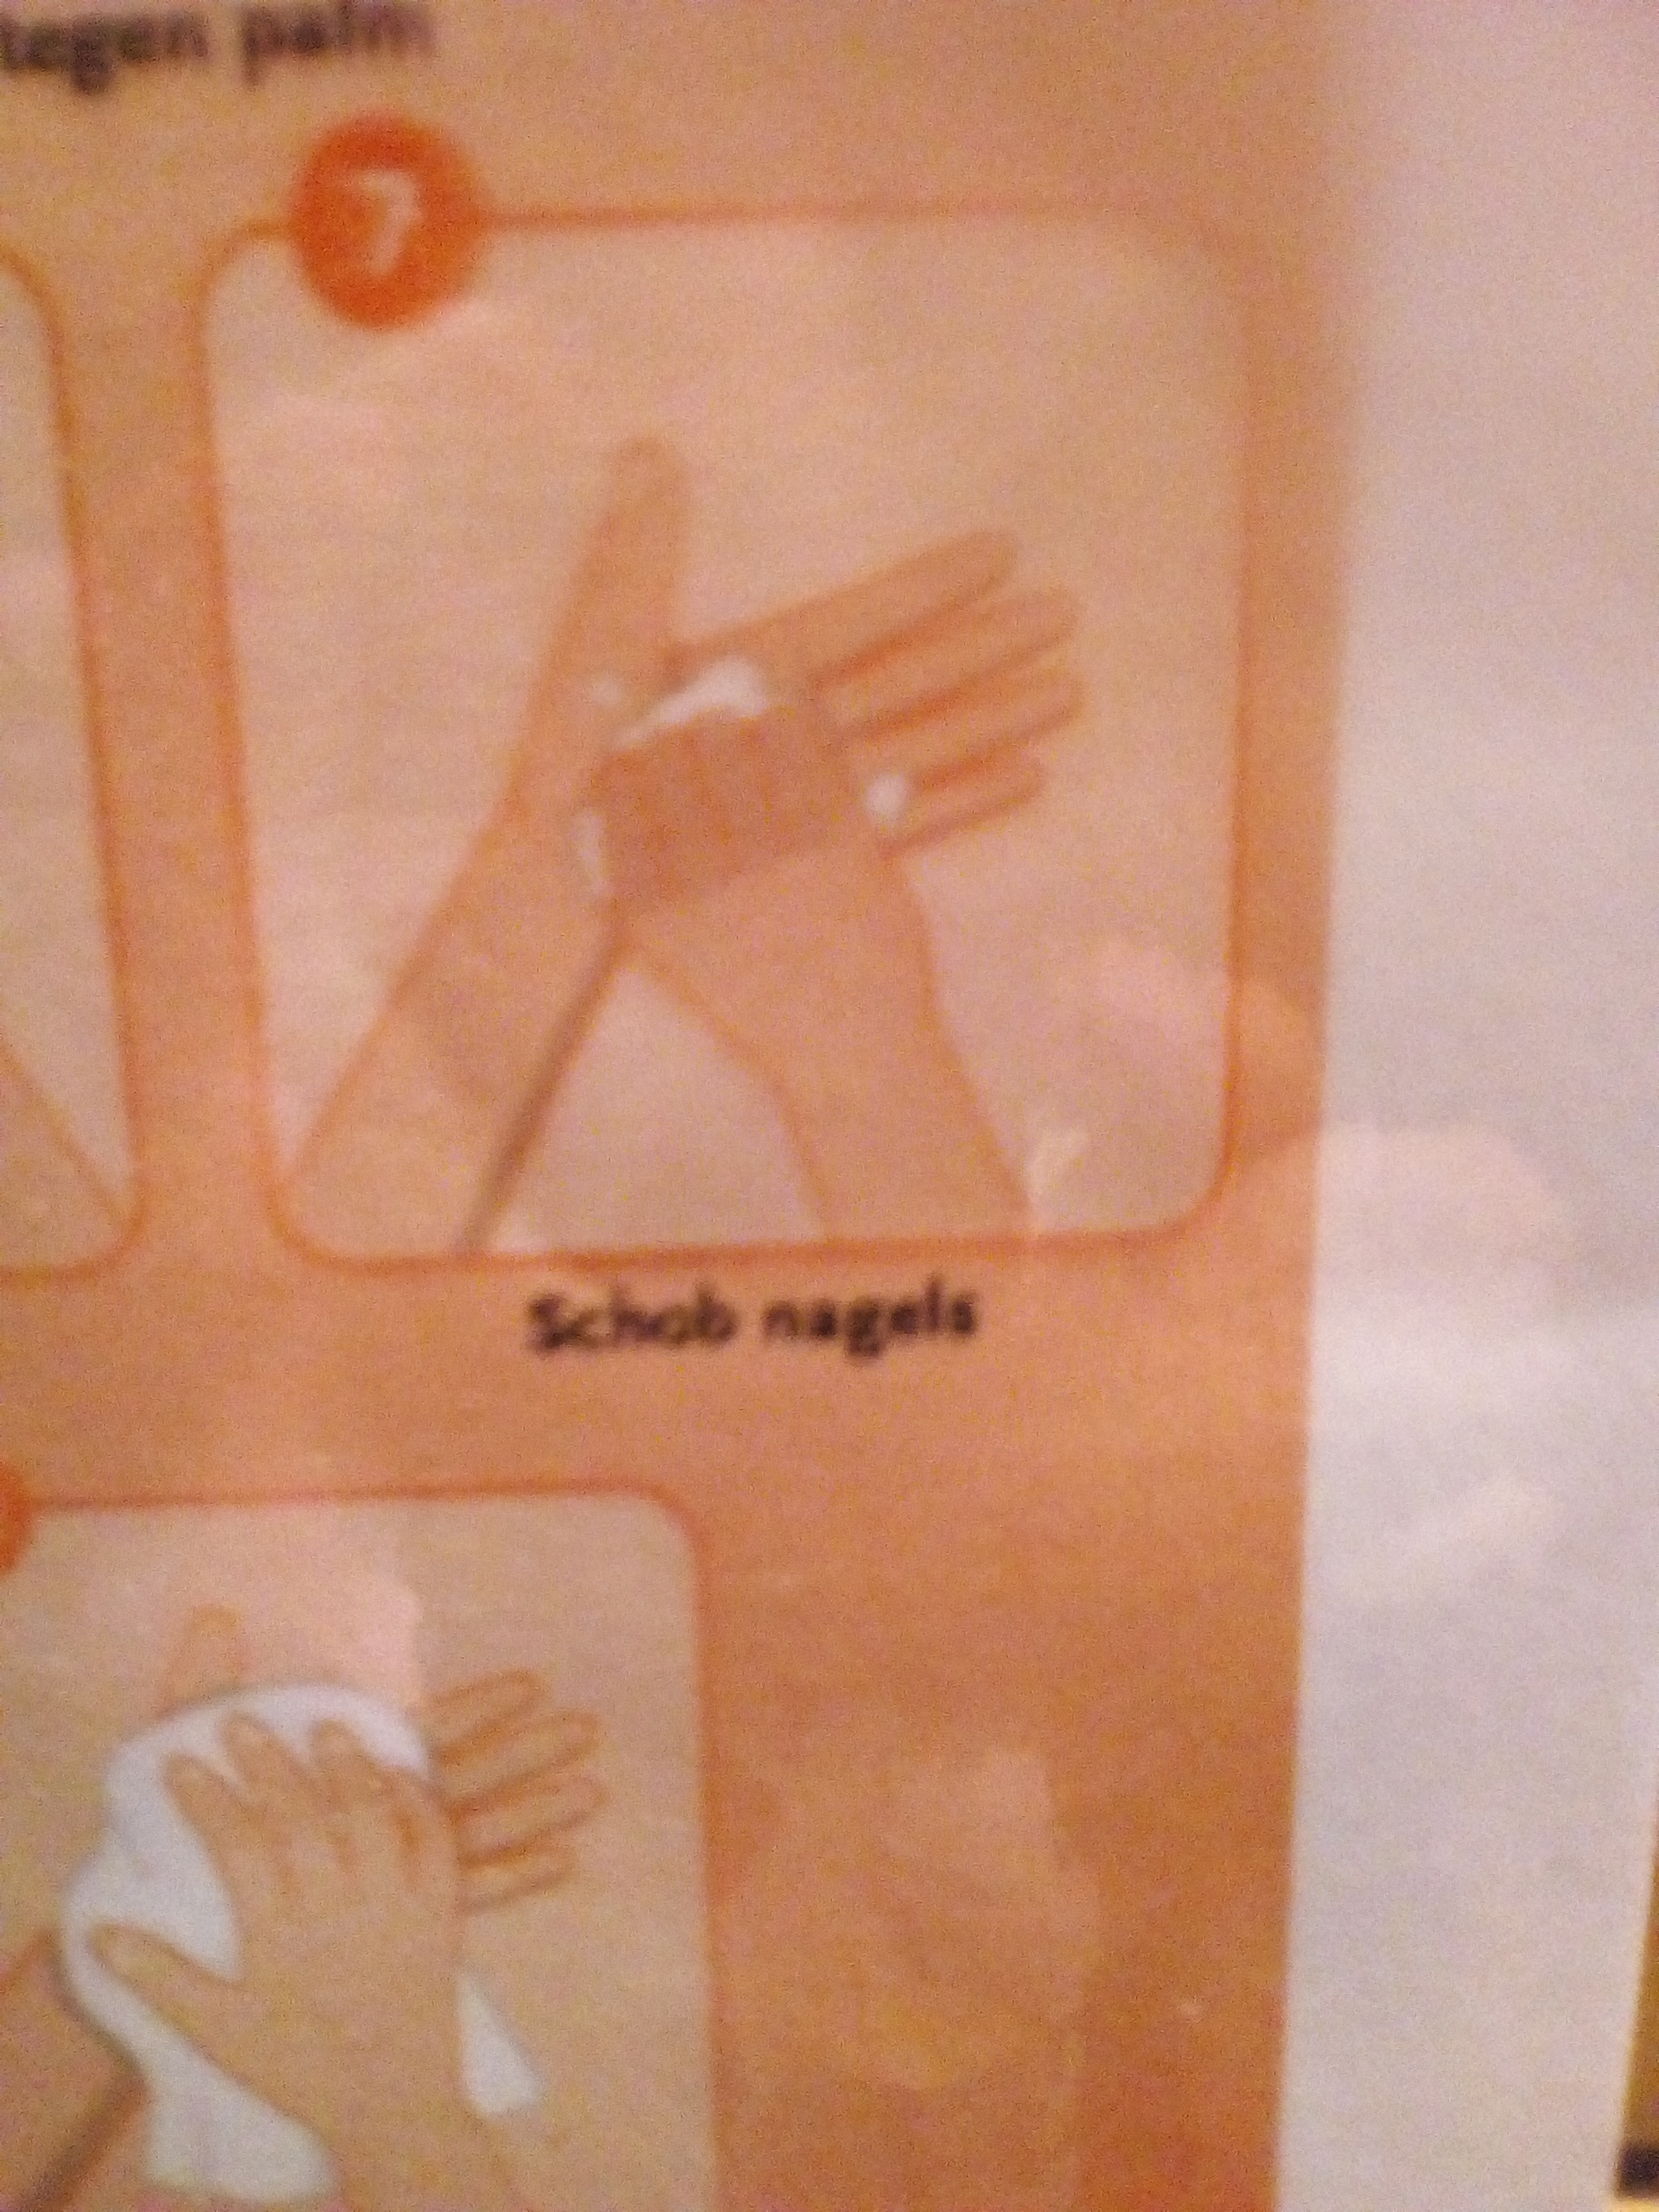 stap 7. 'Schob nagels'